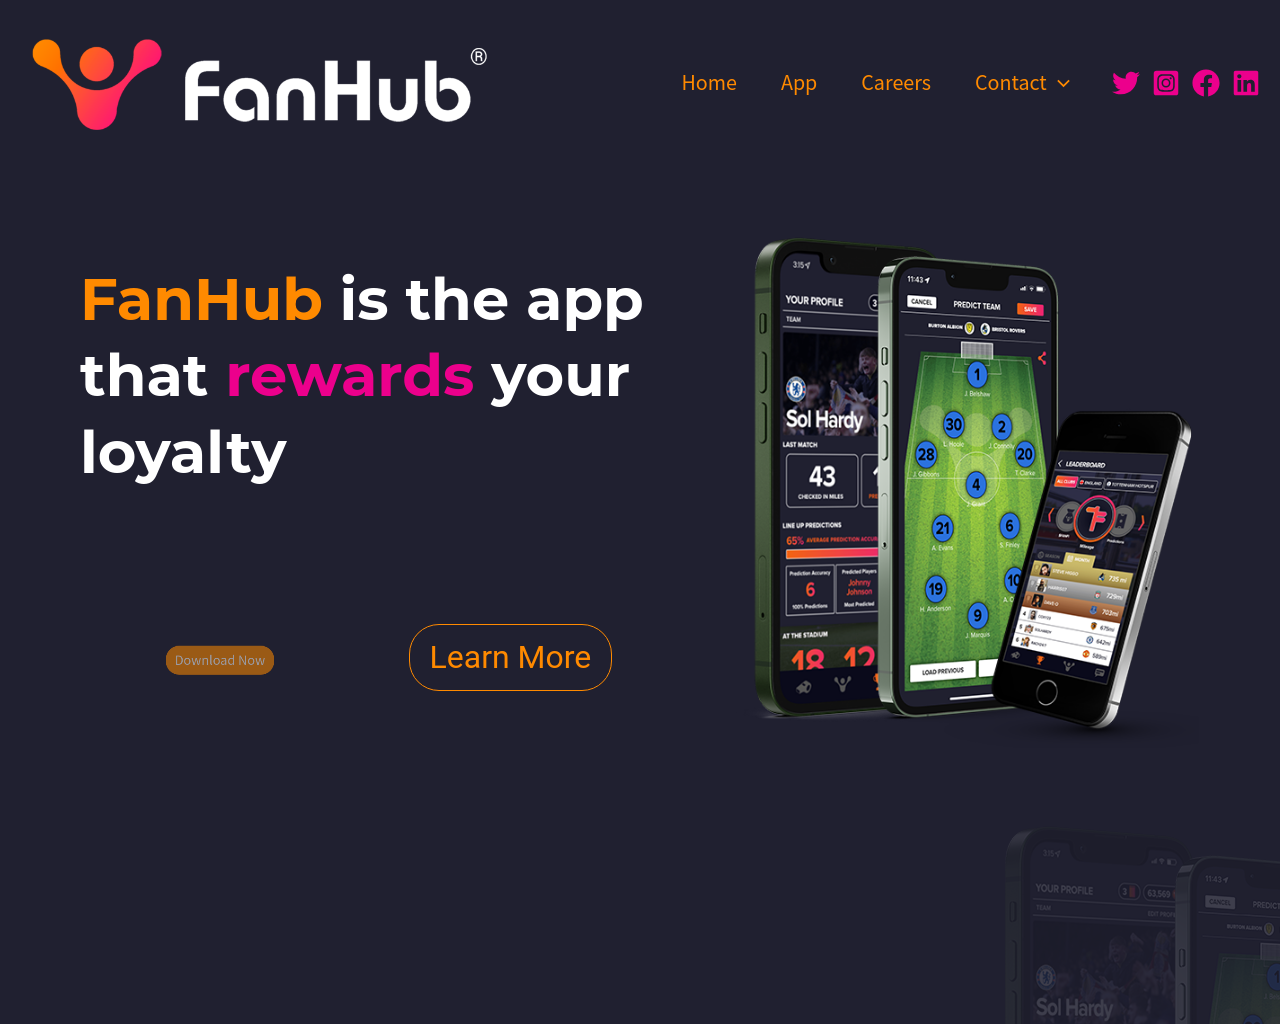 fan-hub.com